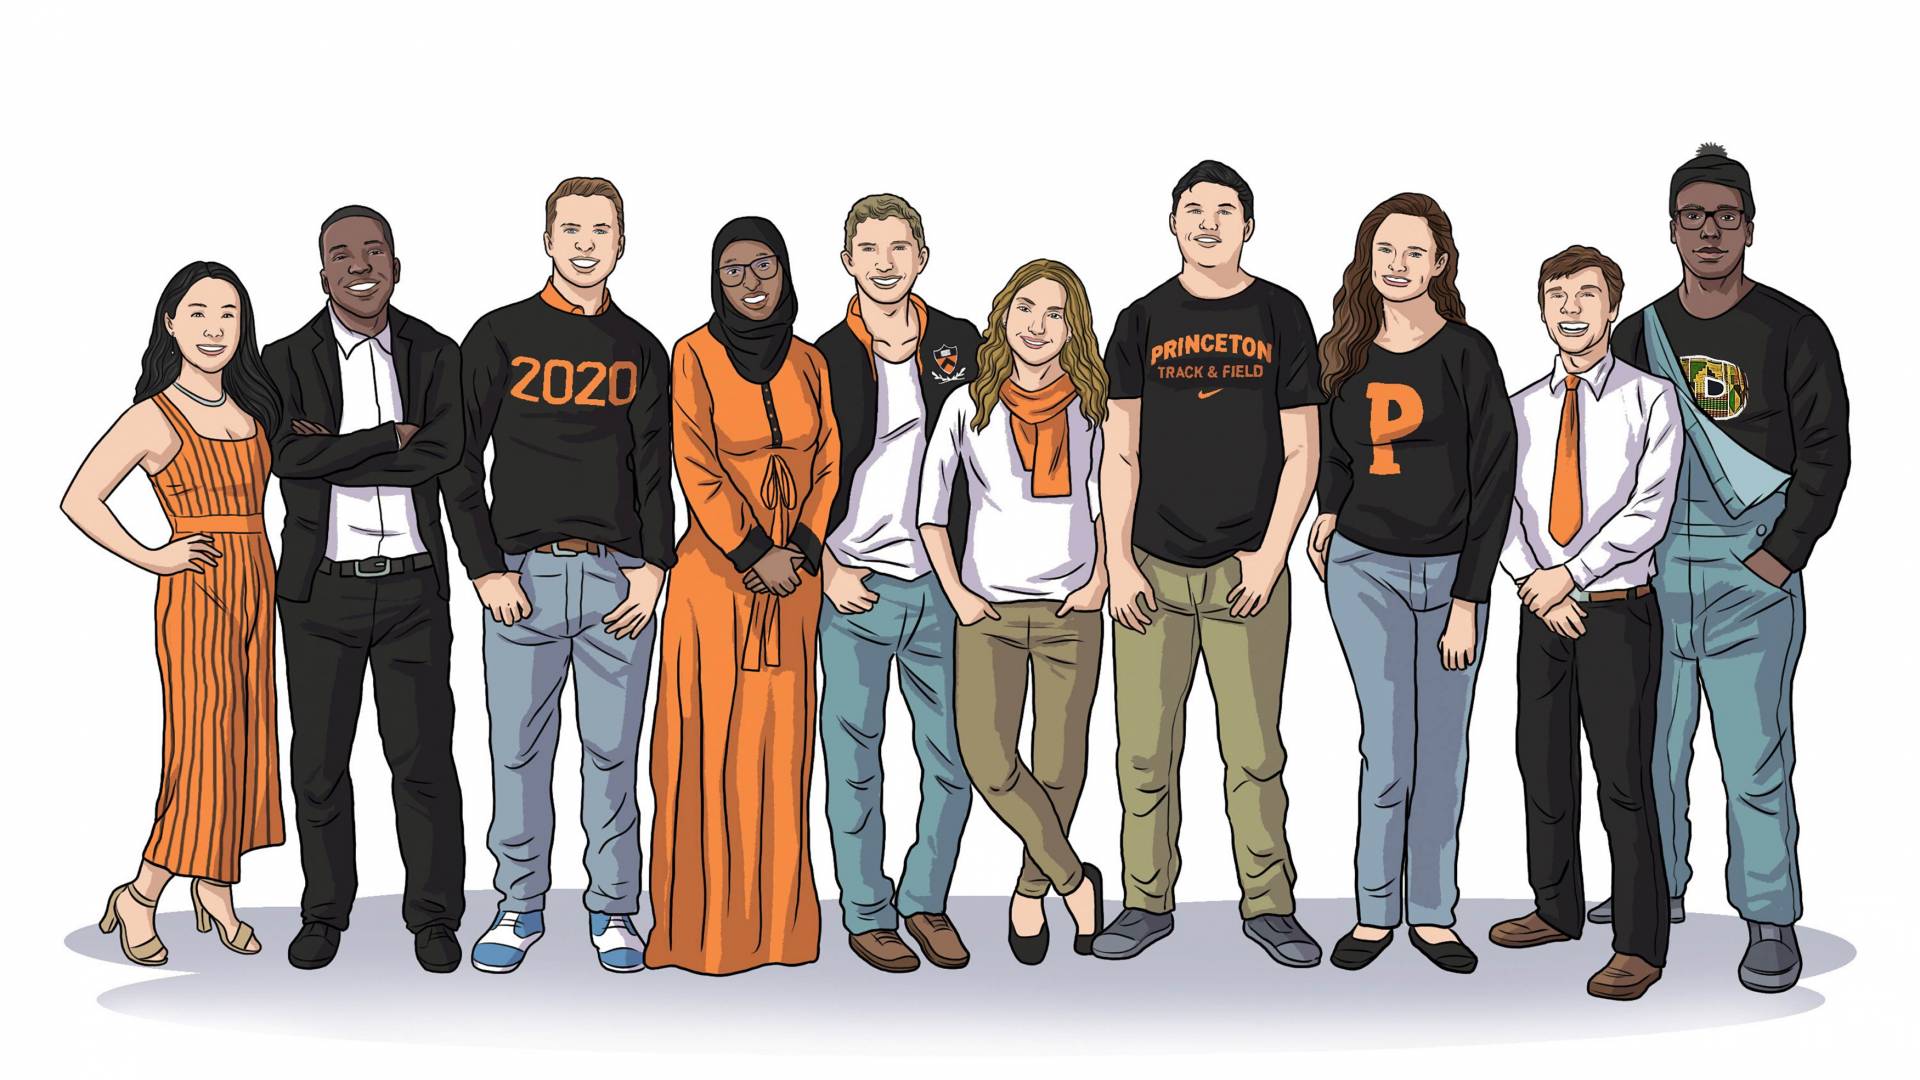 Illustration of the Spirit of Princeton award winners 